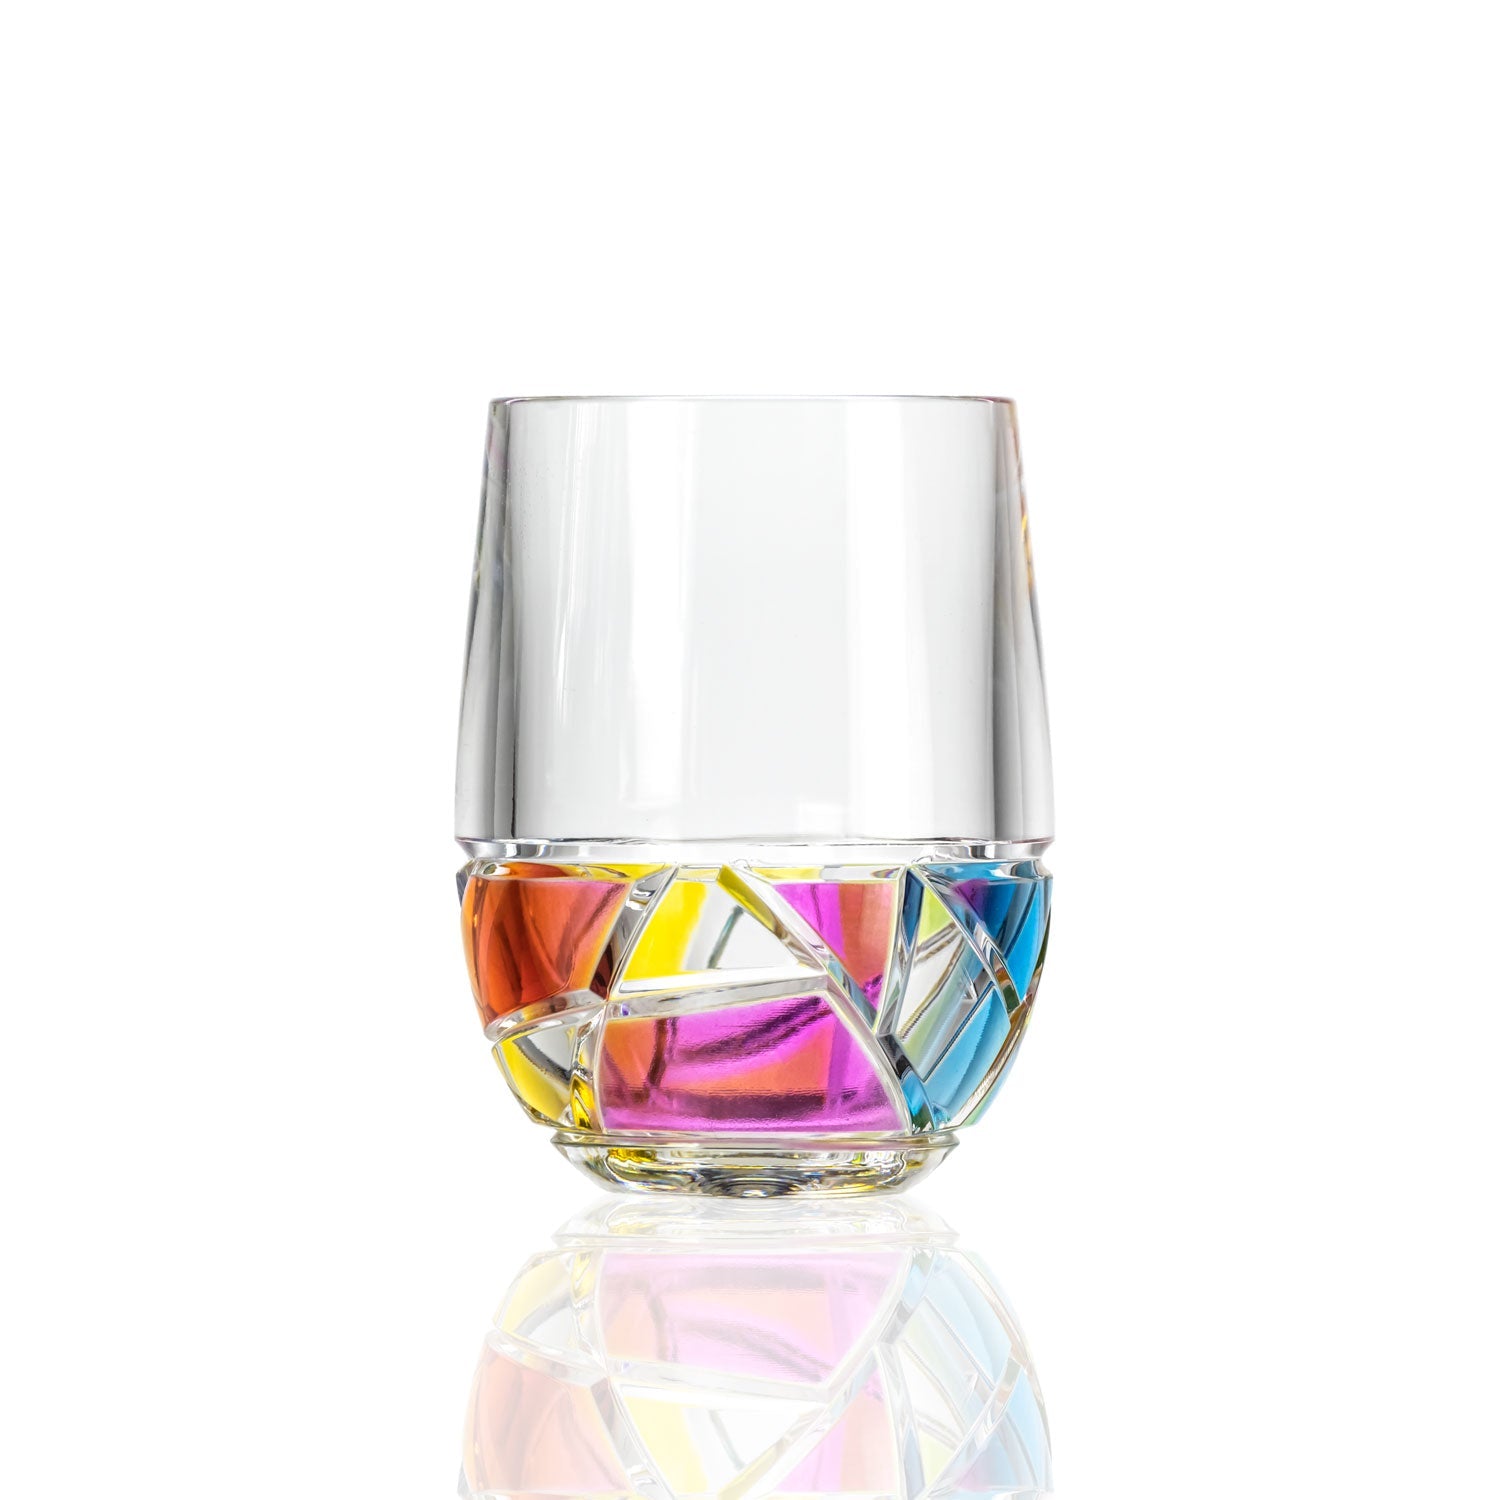 Merritt Designs 10oz Mosaic Rainbow Acrylic Tumbler Water Glass